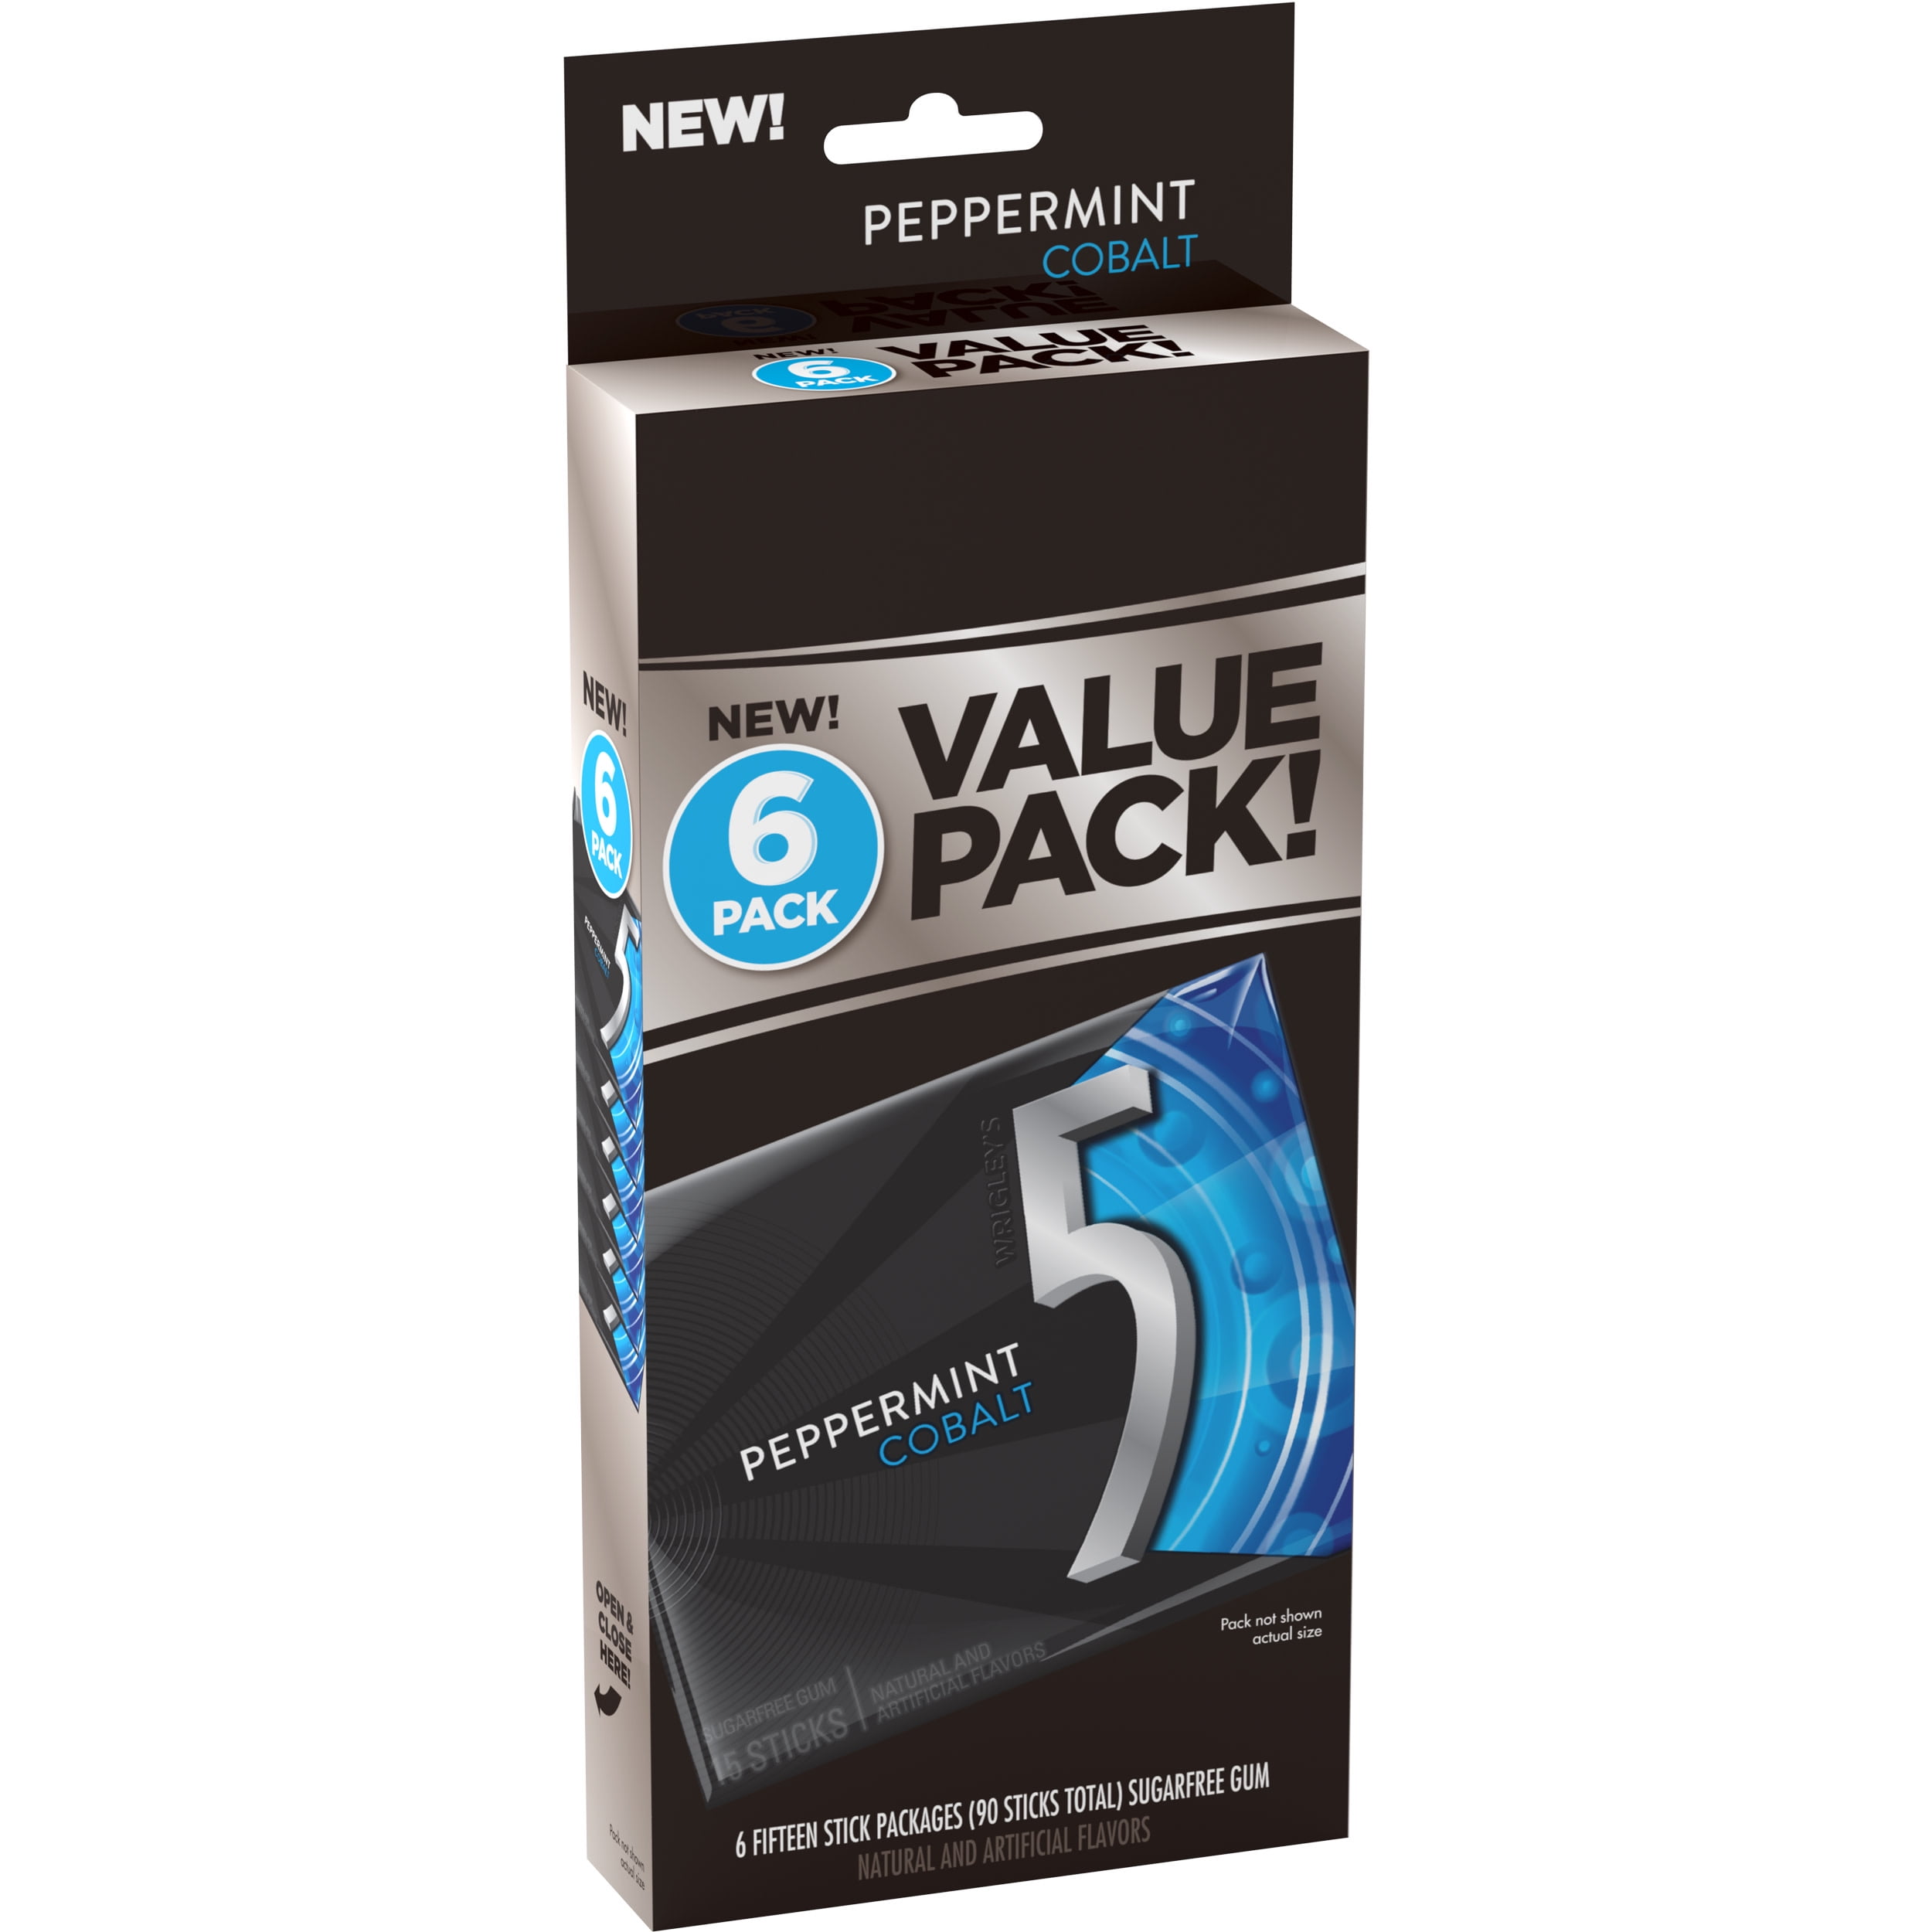 5 GUM Peppermint Cobalt Sugar Free Chewing Gum Pack – RoomBox